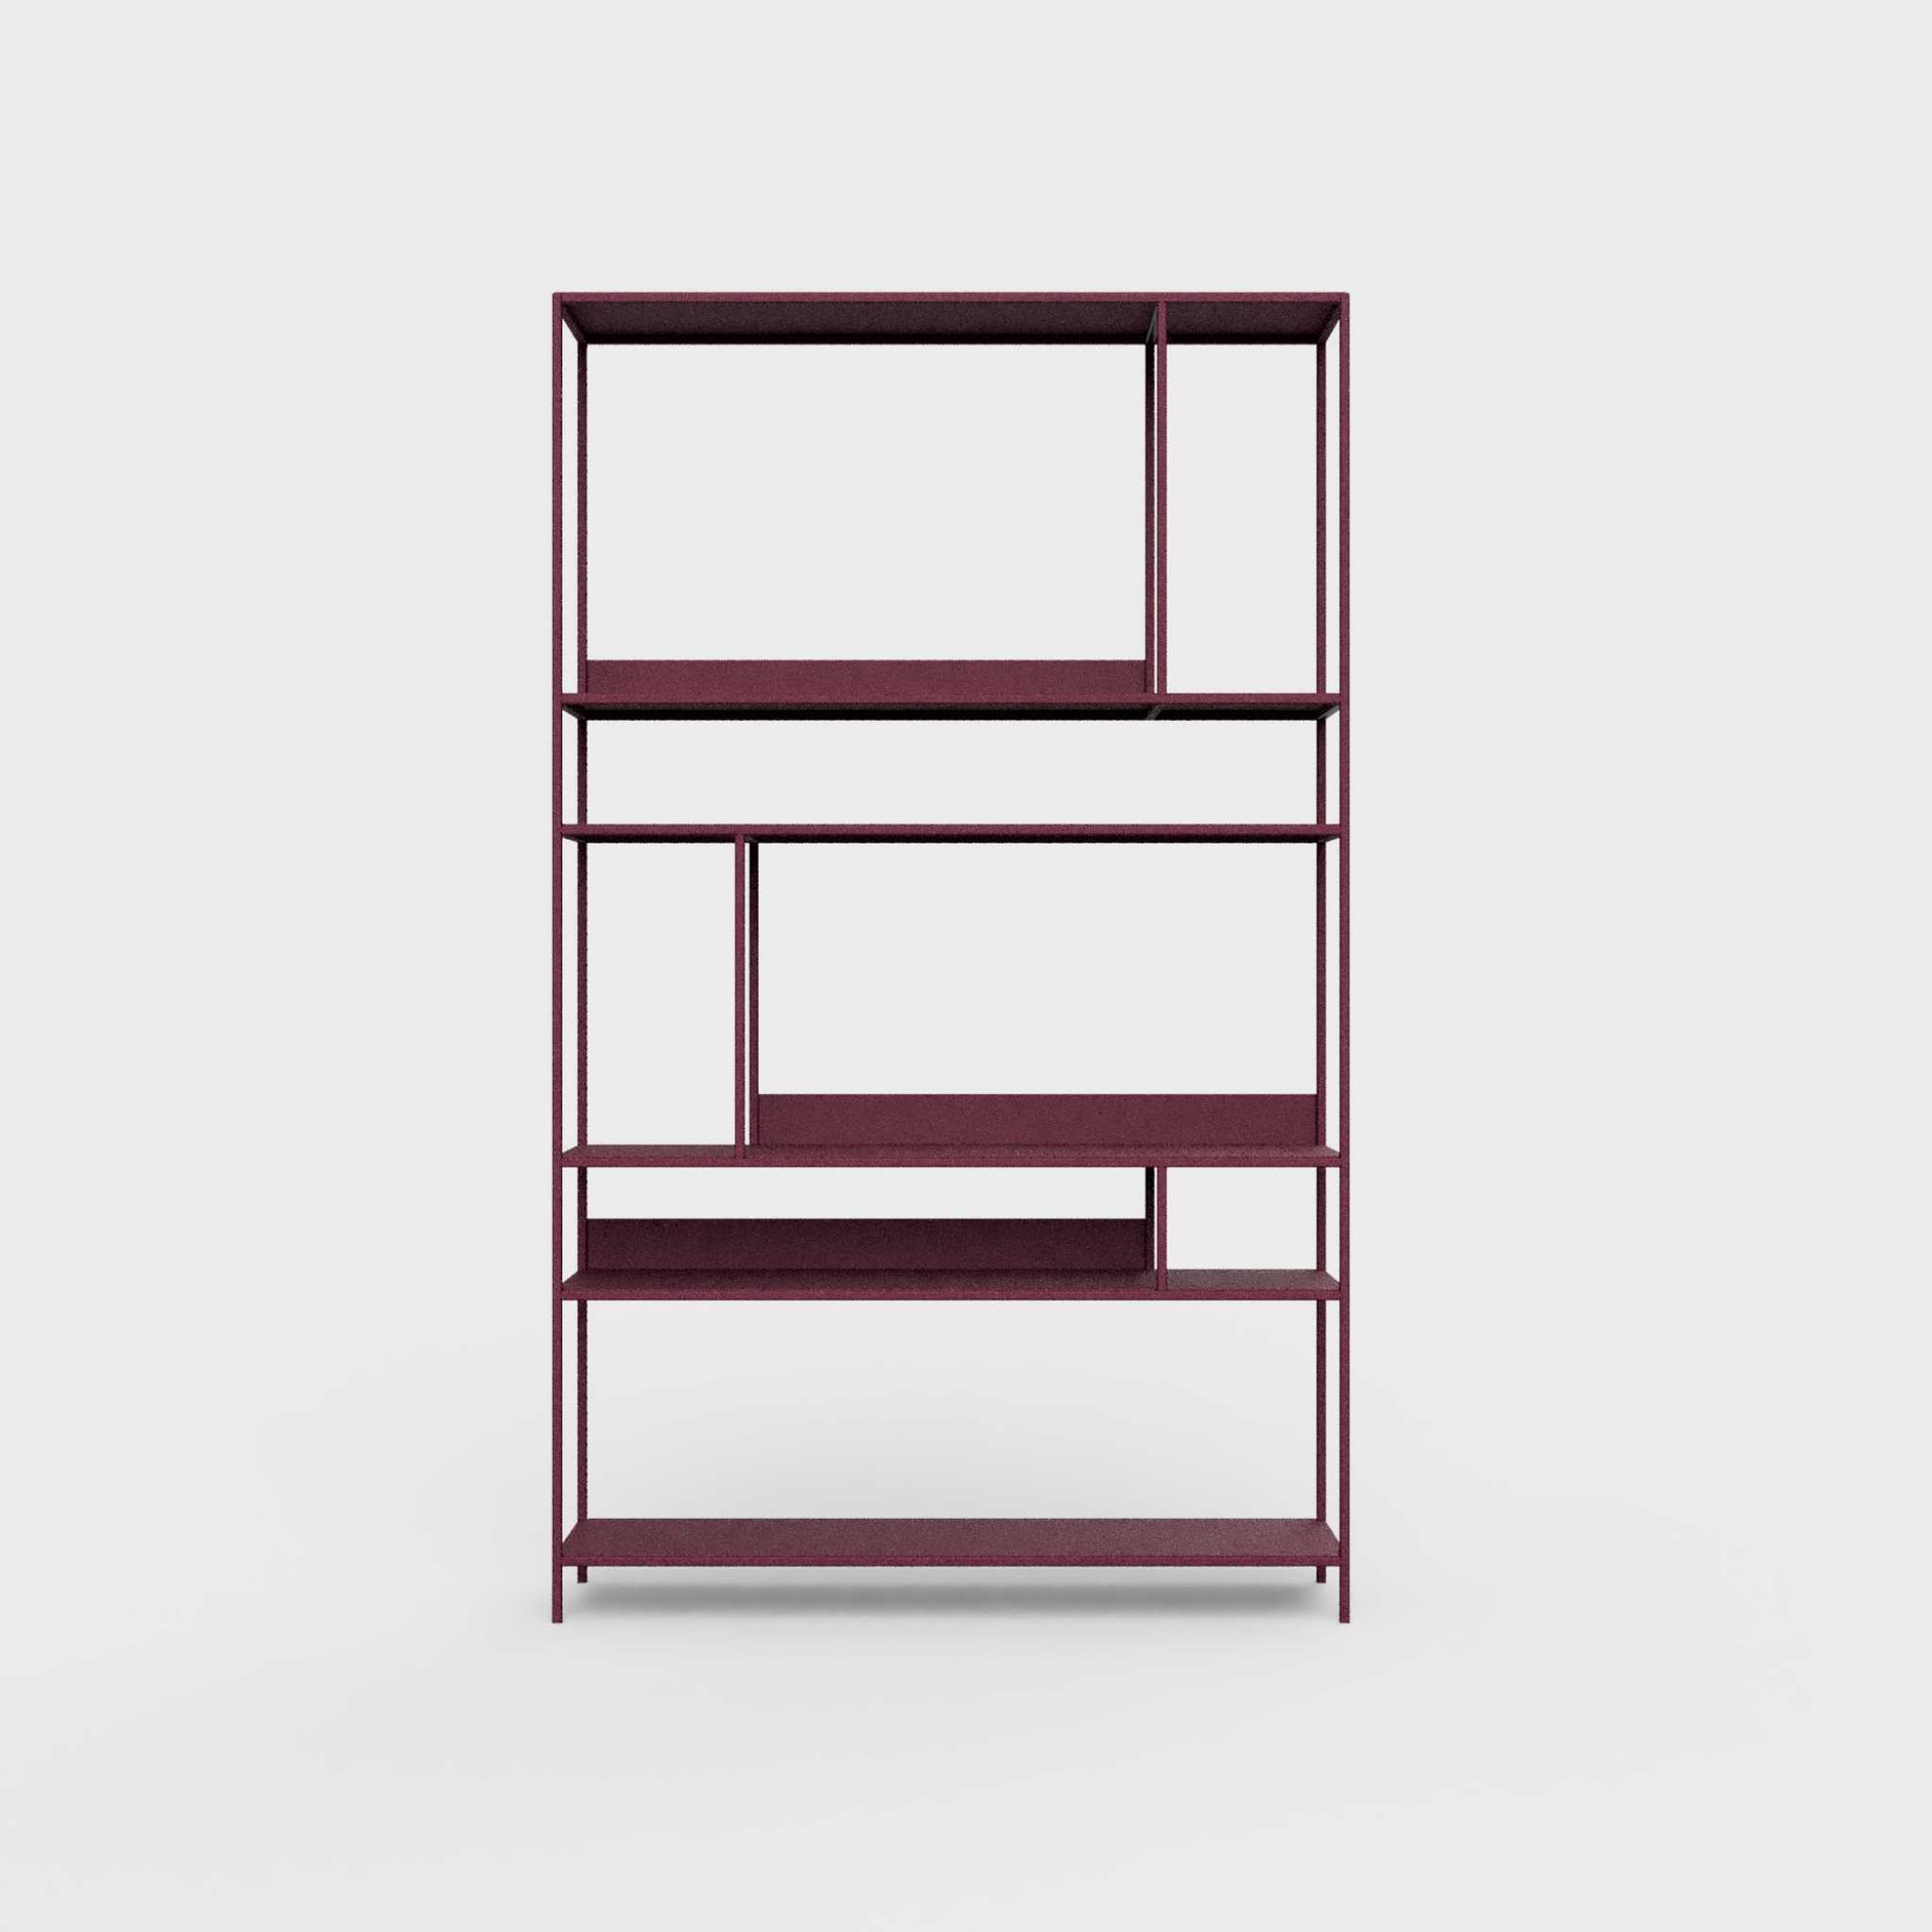 ÉTAUDORÉ Floks 01 powder coated steel bookcase in plum red / purple